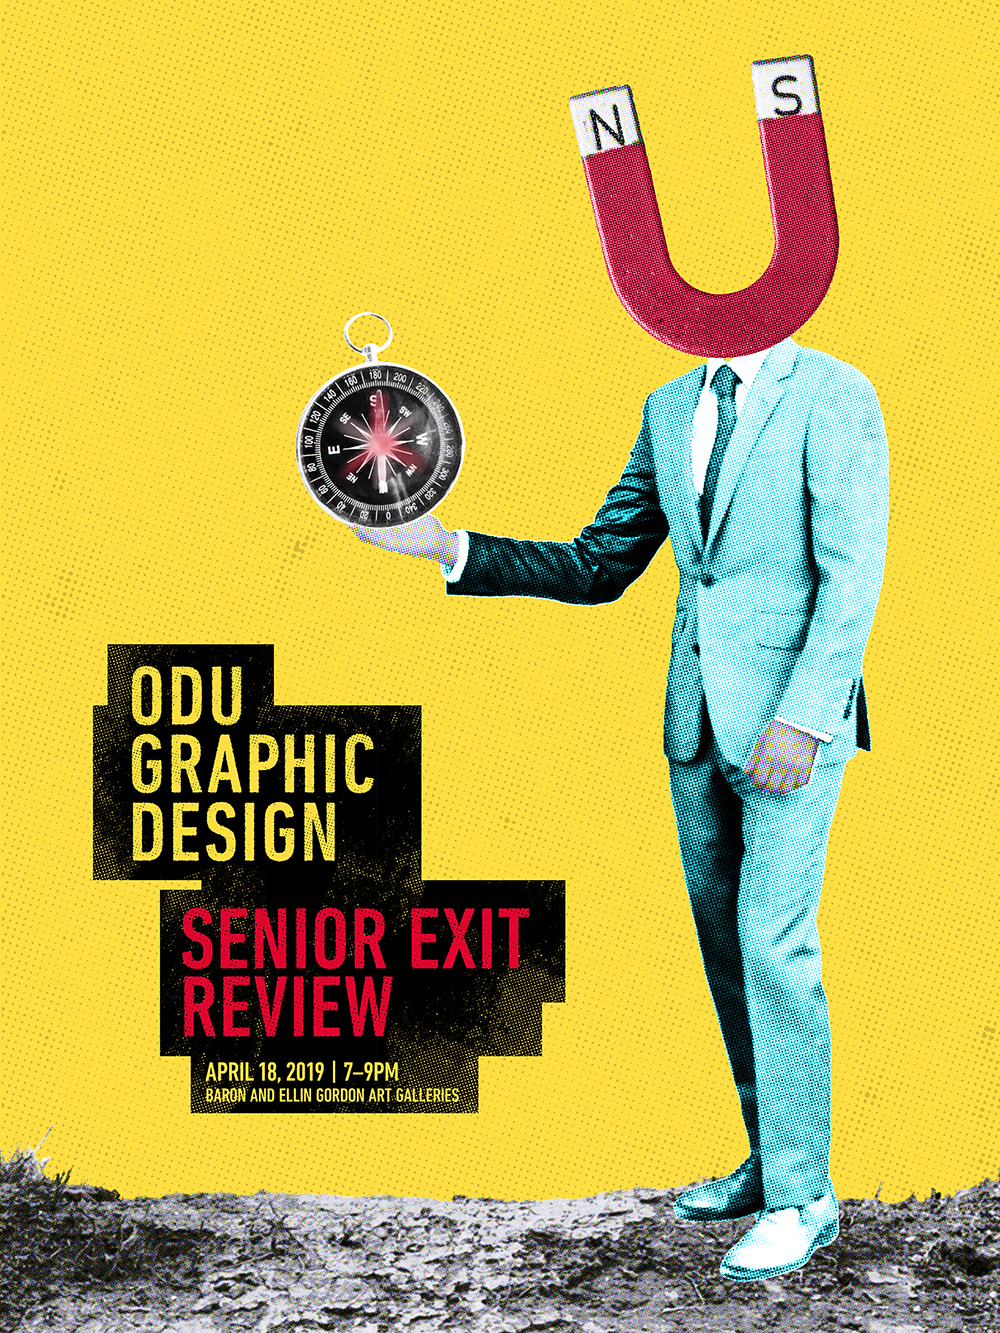 ODU Exit Review Image 2019